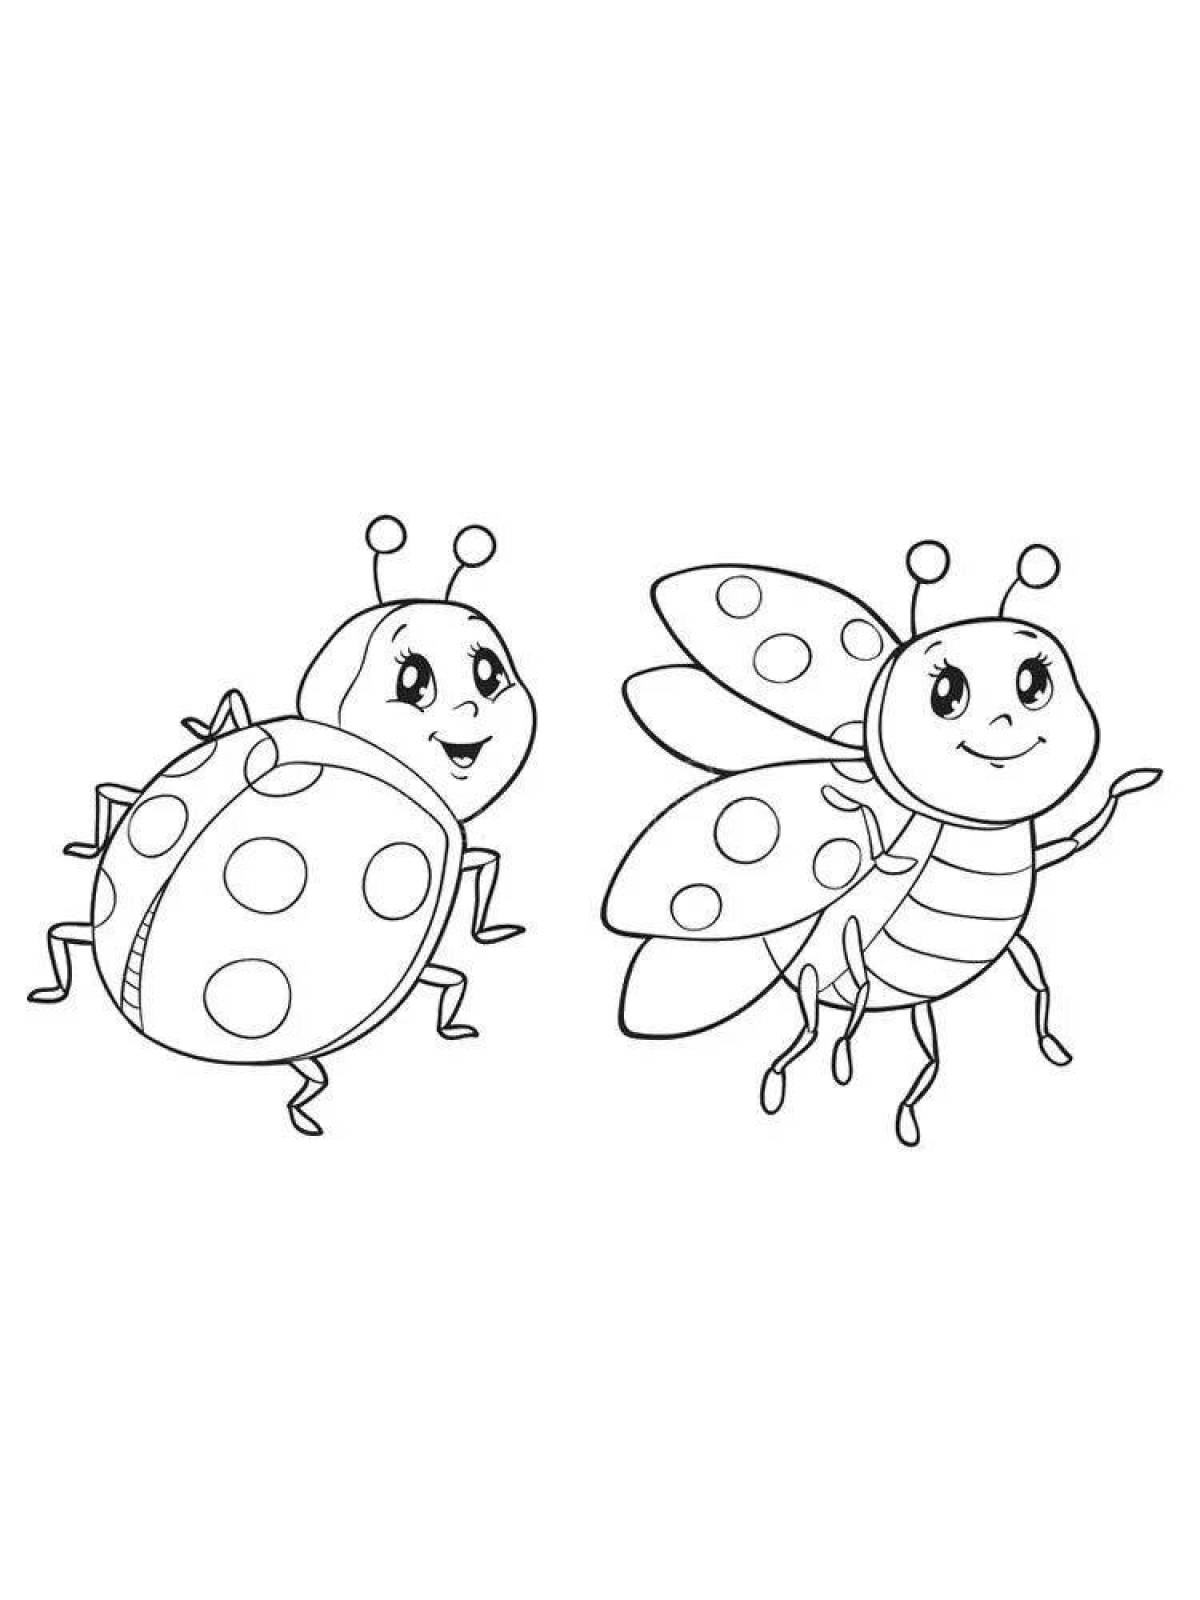 Shiny ladybug coloring book for kids